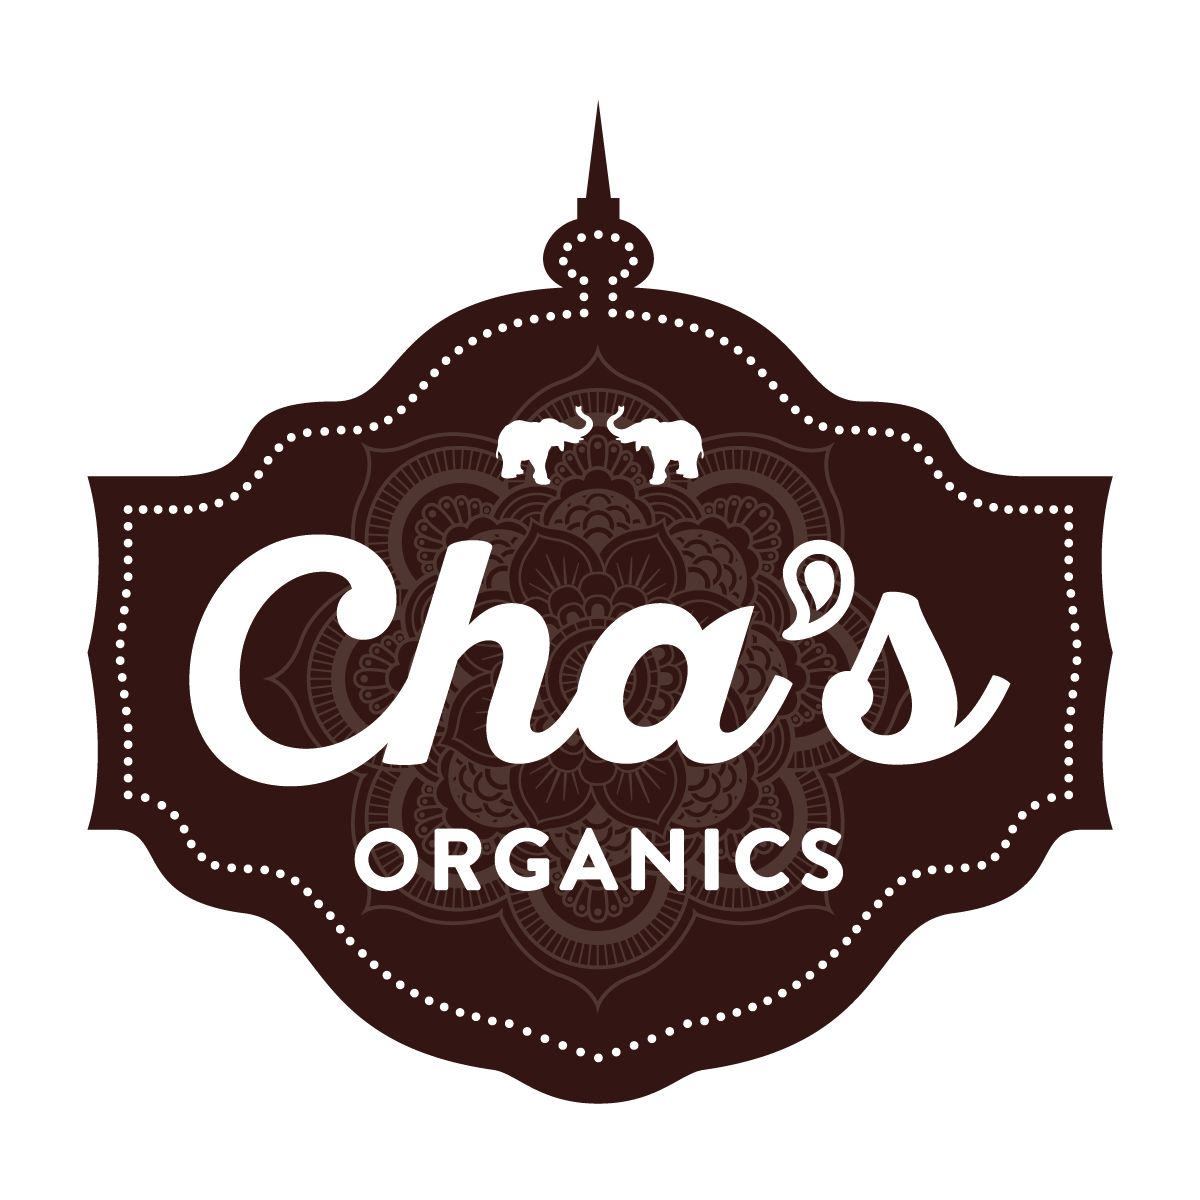 Cha's organic